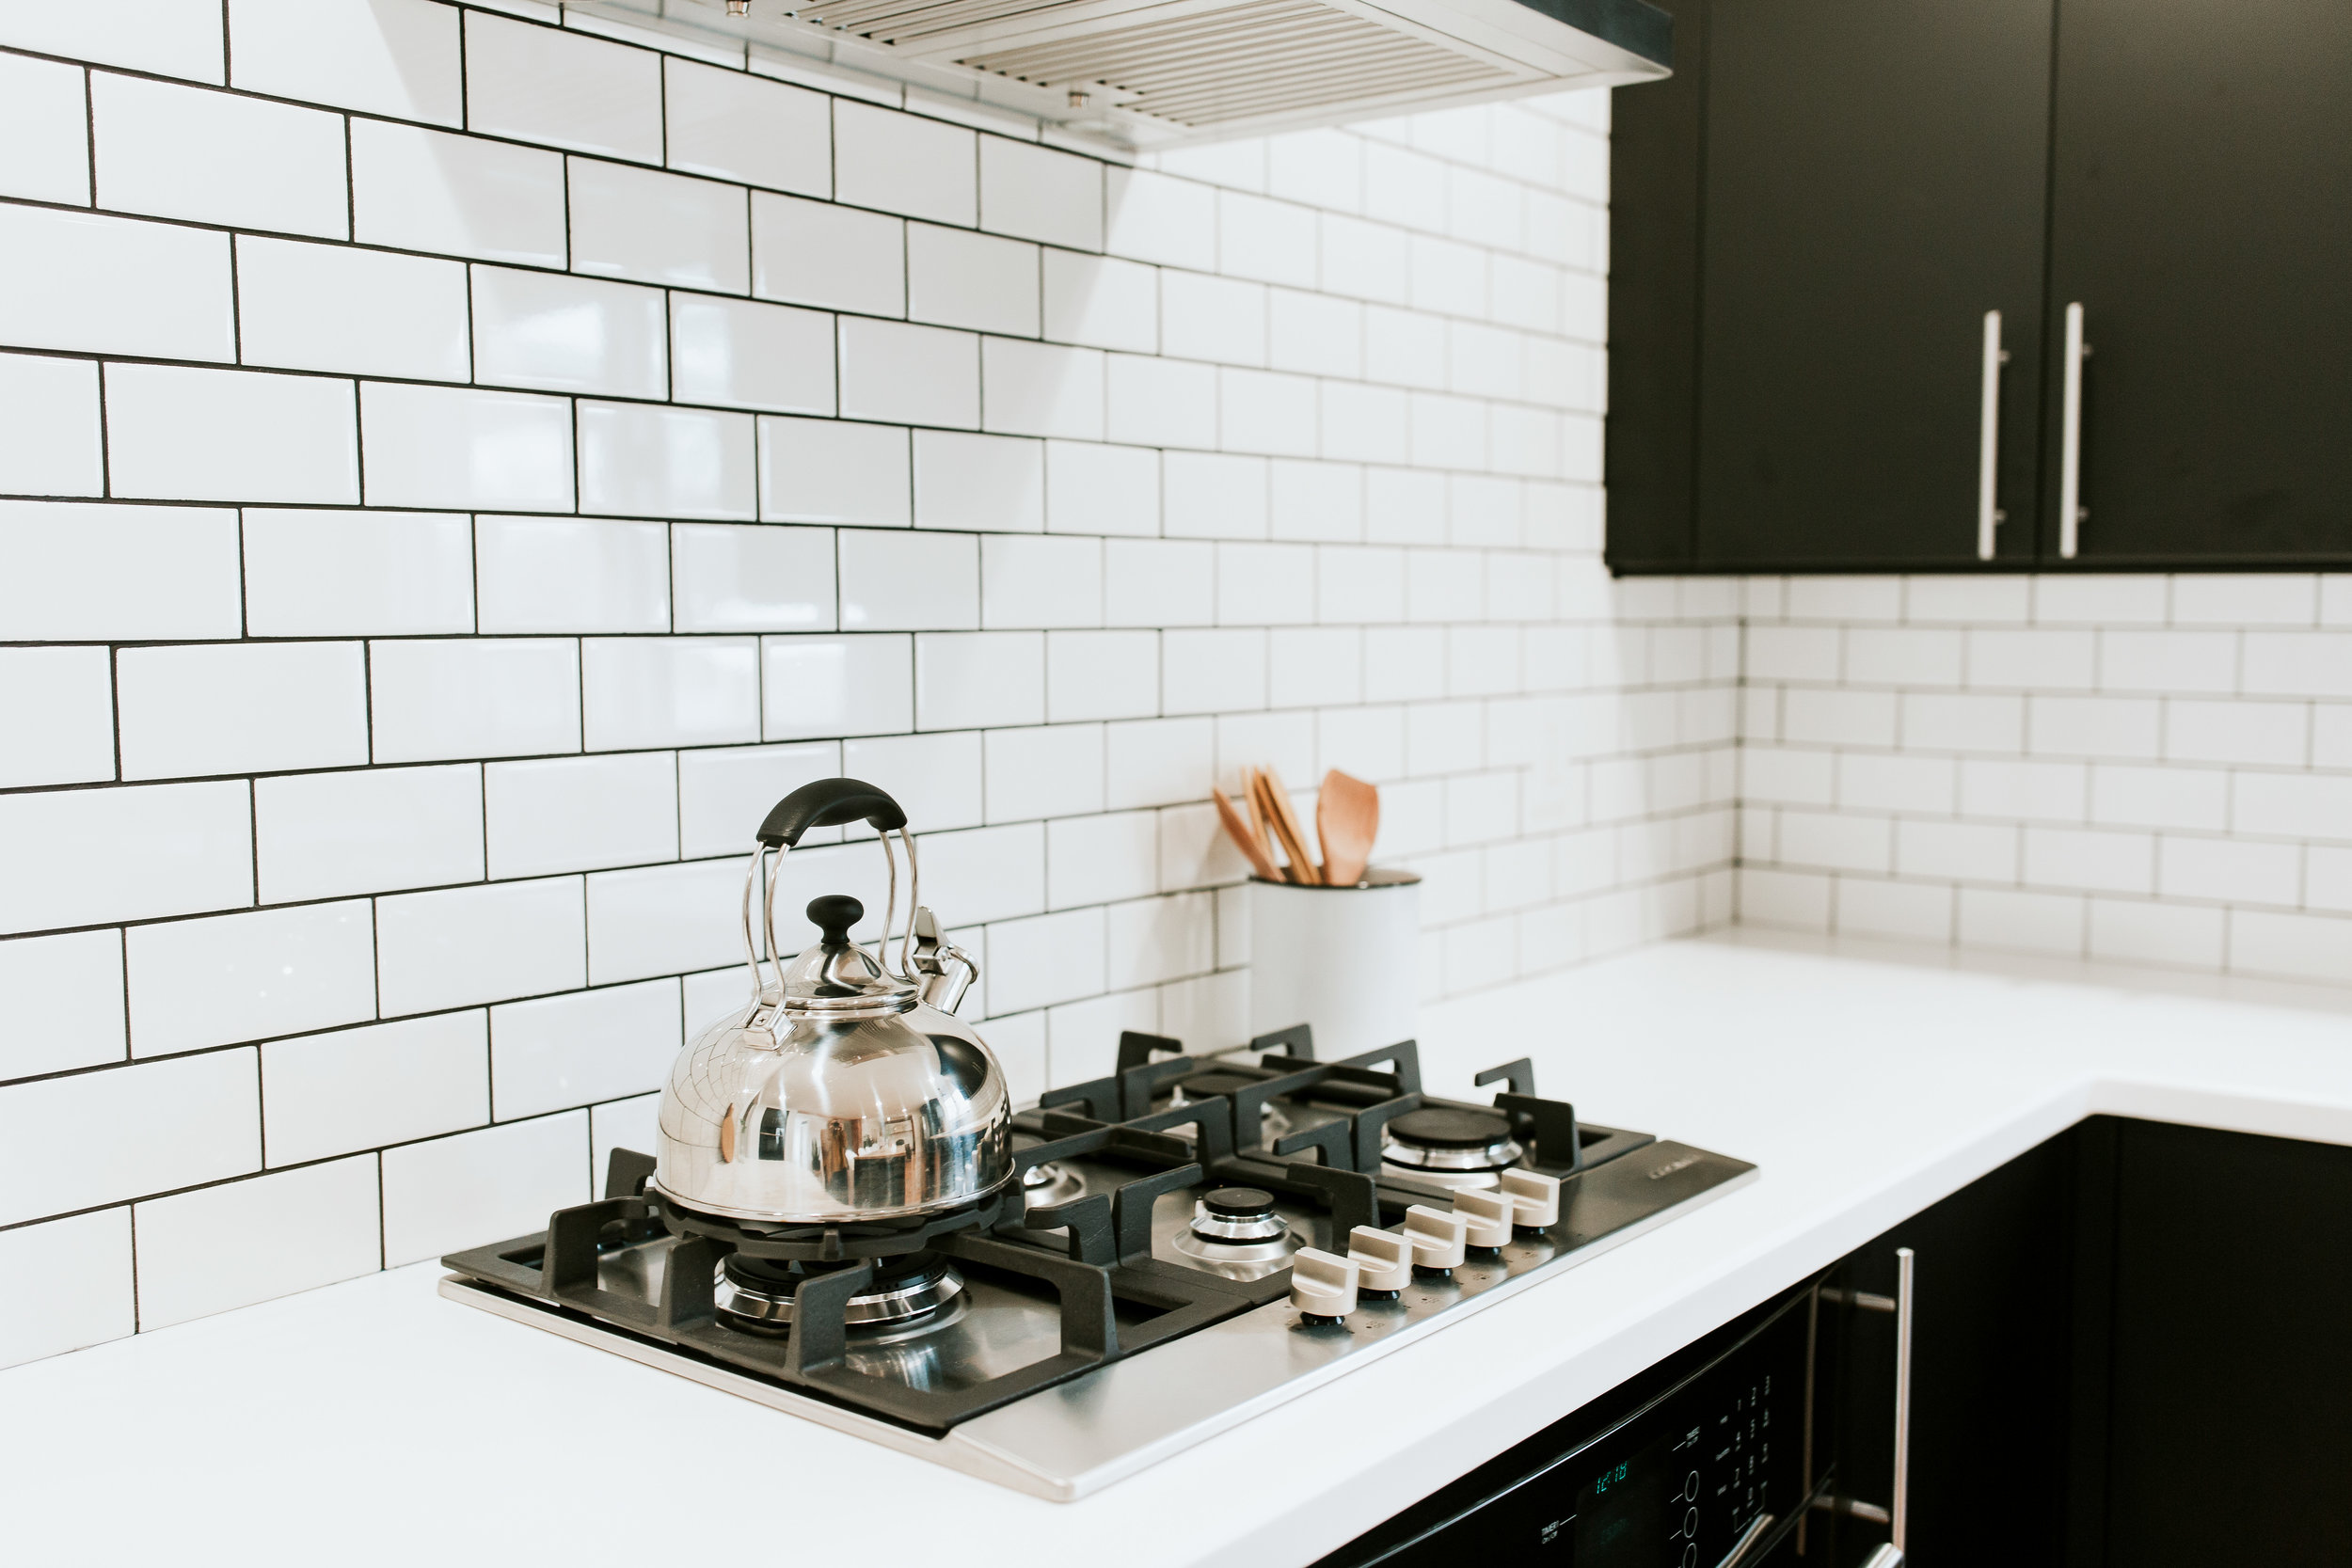 Full modern kitchen tour - Ikea Kungsbacka cabinets, subway tile, gas stove, range hood